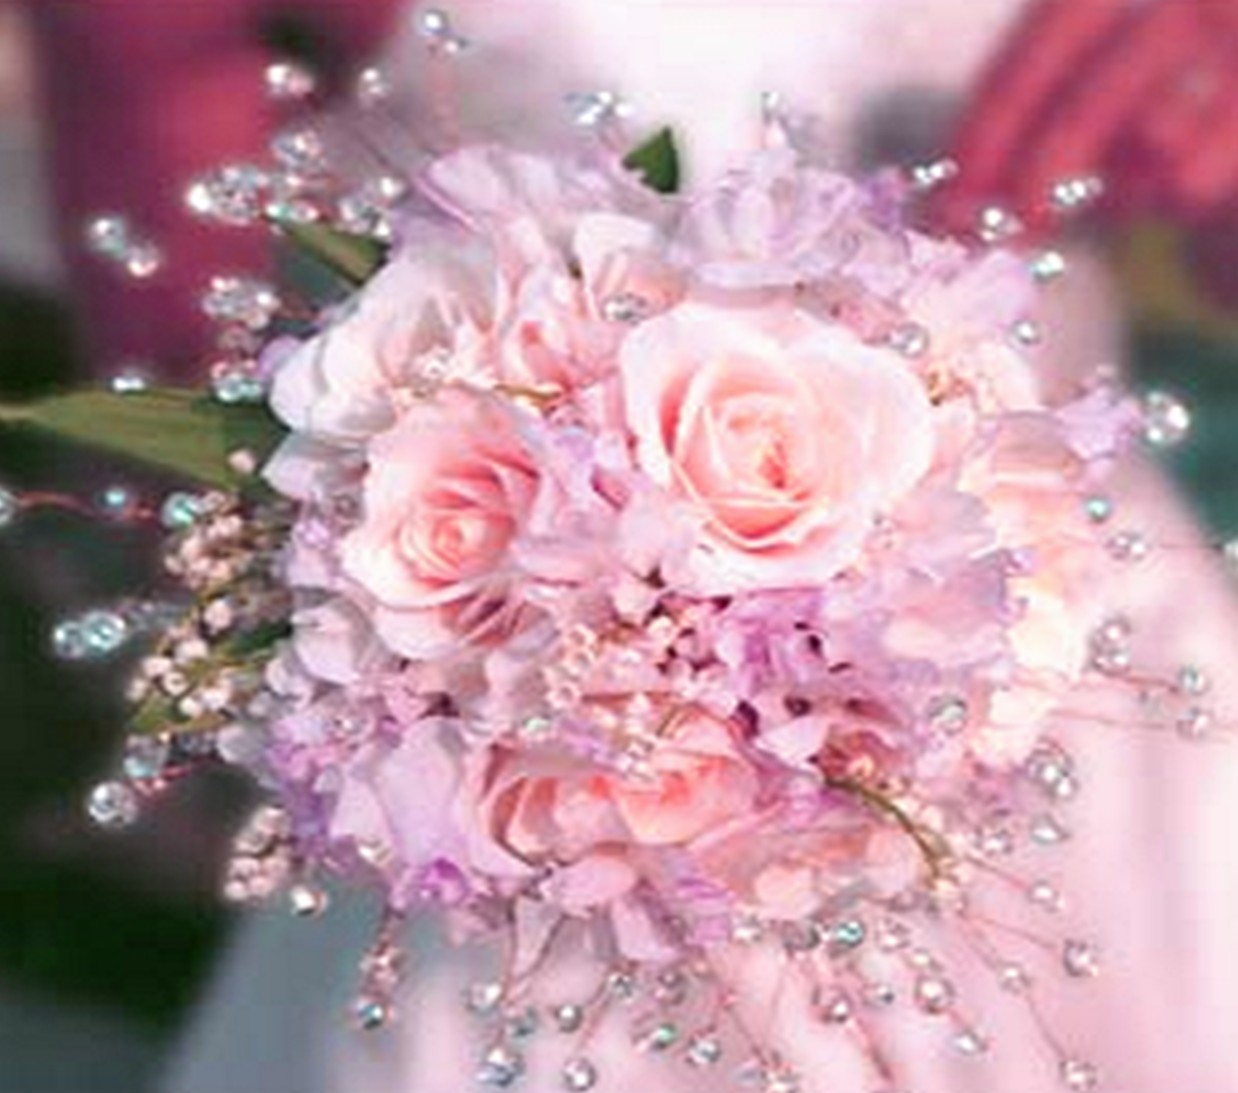 Flowers Wedding Bouquet Ideas